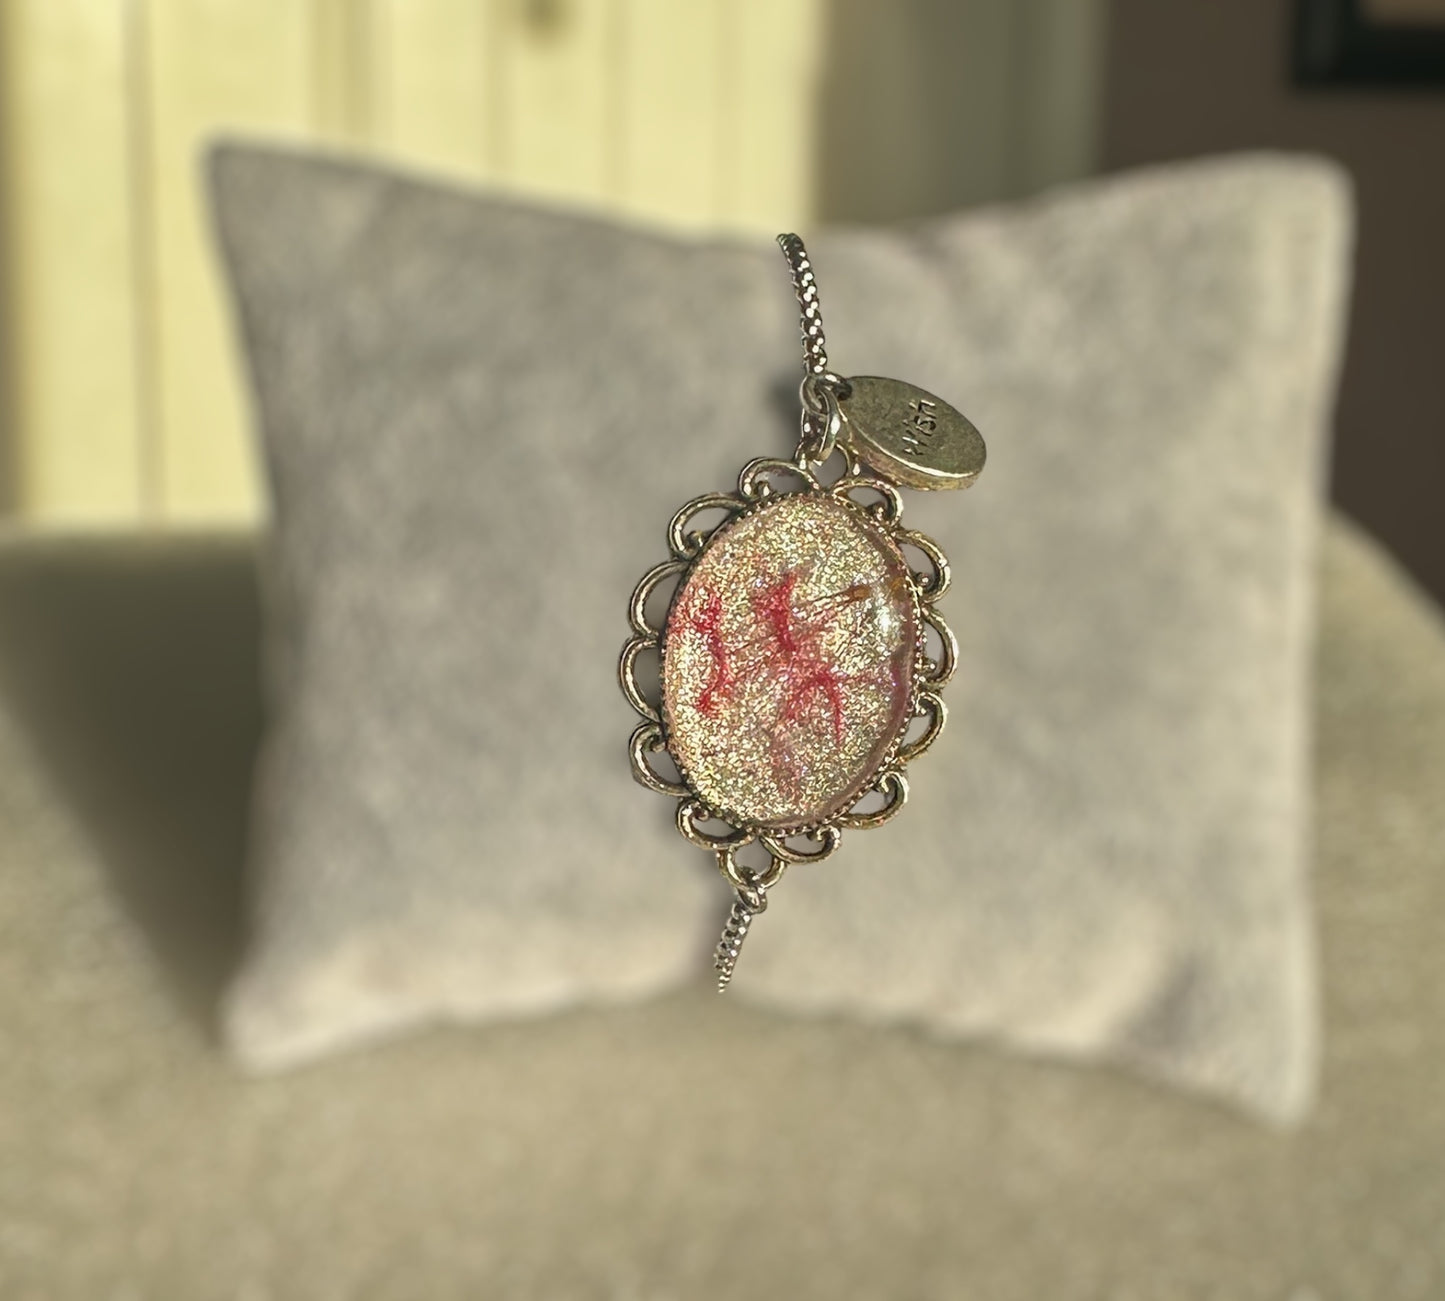 Fairy Wishes Bracelet - Wish Charm Bracelet Handmade with Real Dandelion Seeds